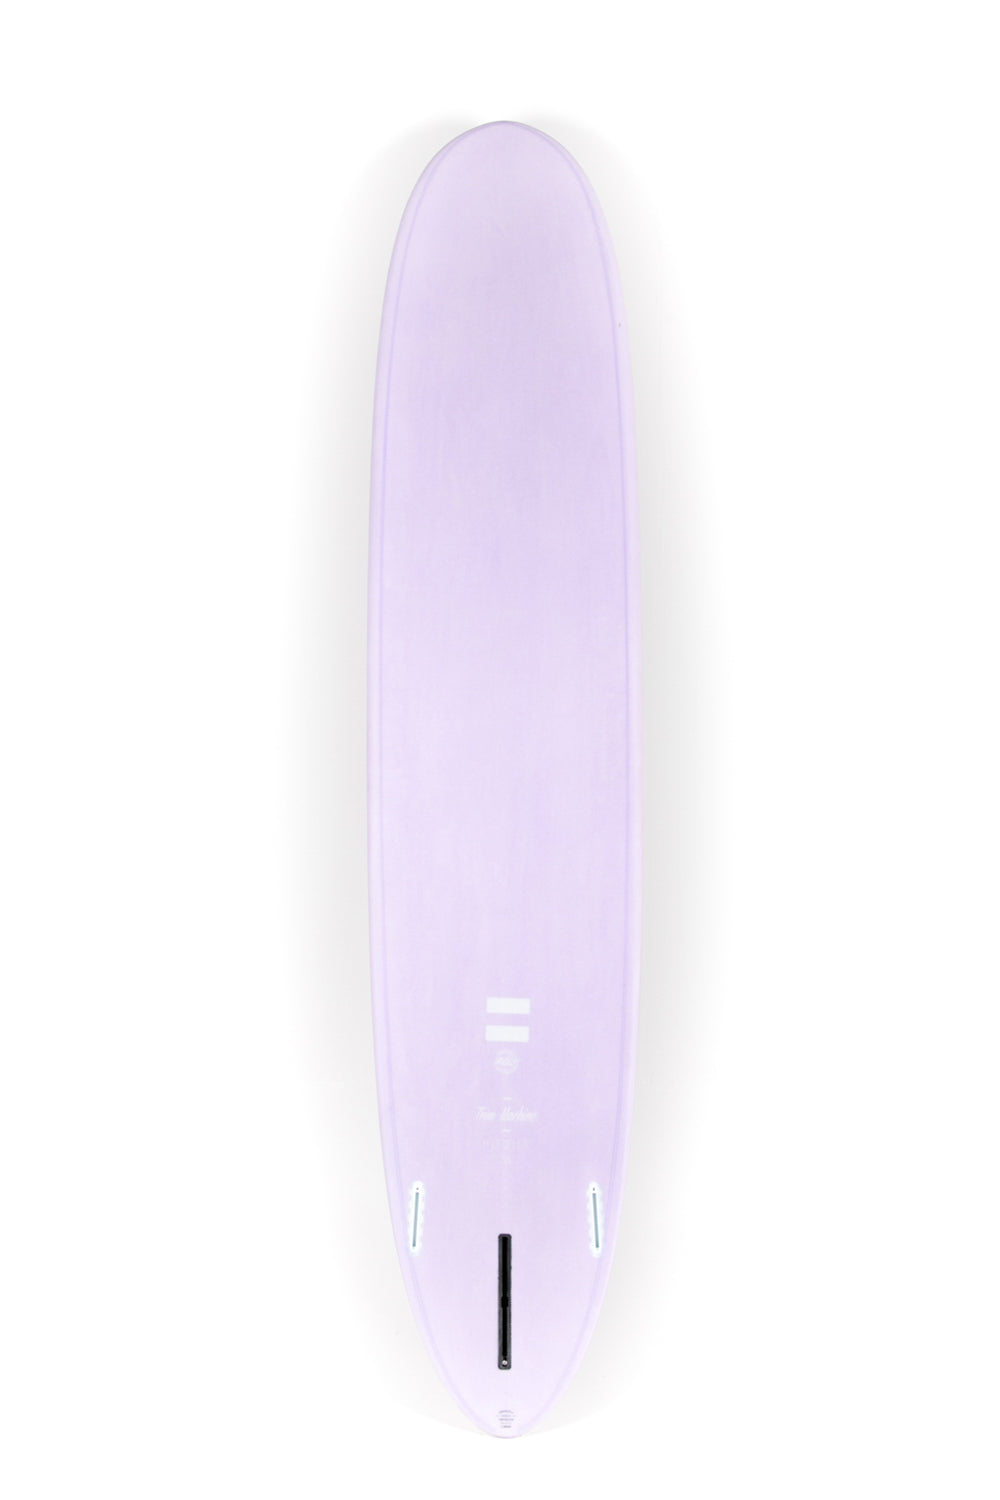 Pukas-Surf-Shop-Indio-Surfboards-Trim-Machine-Purple